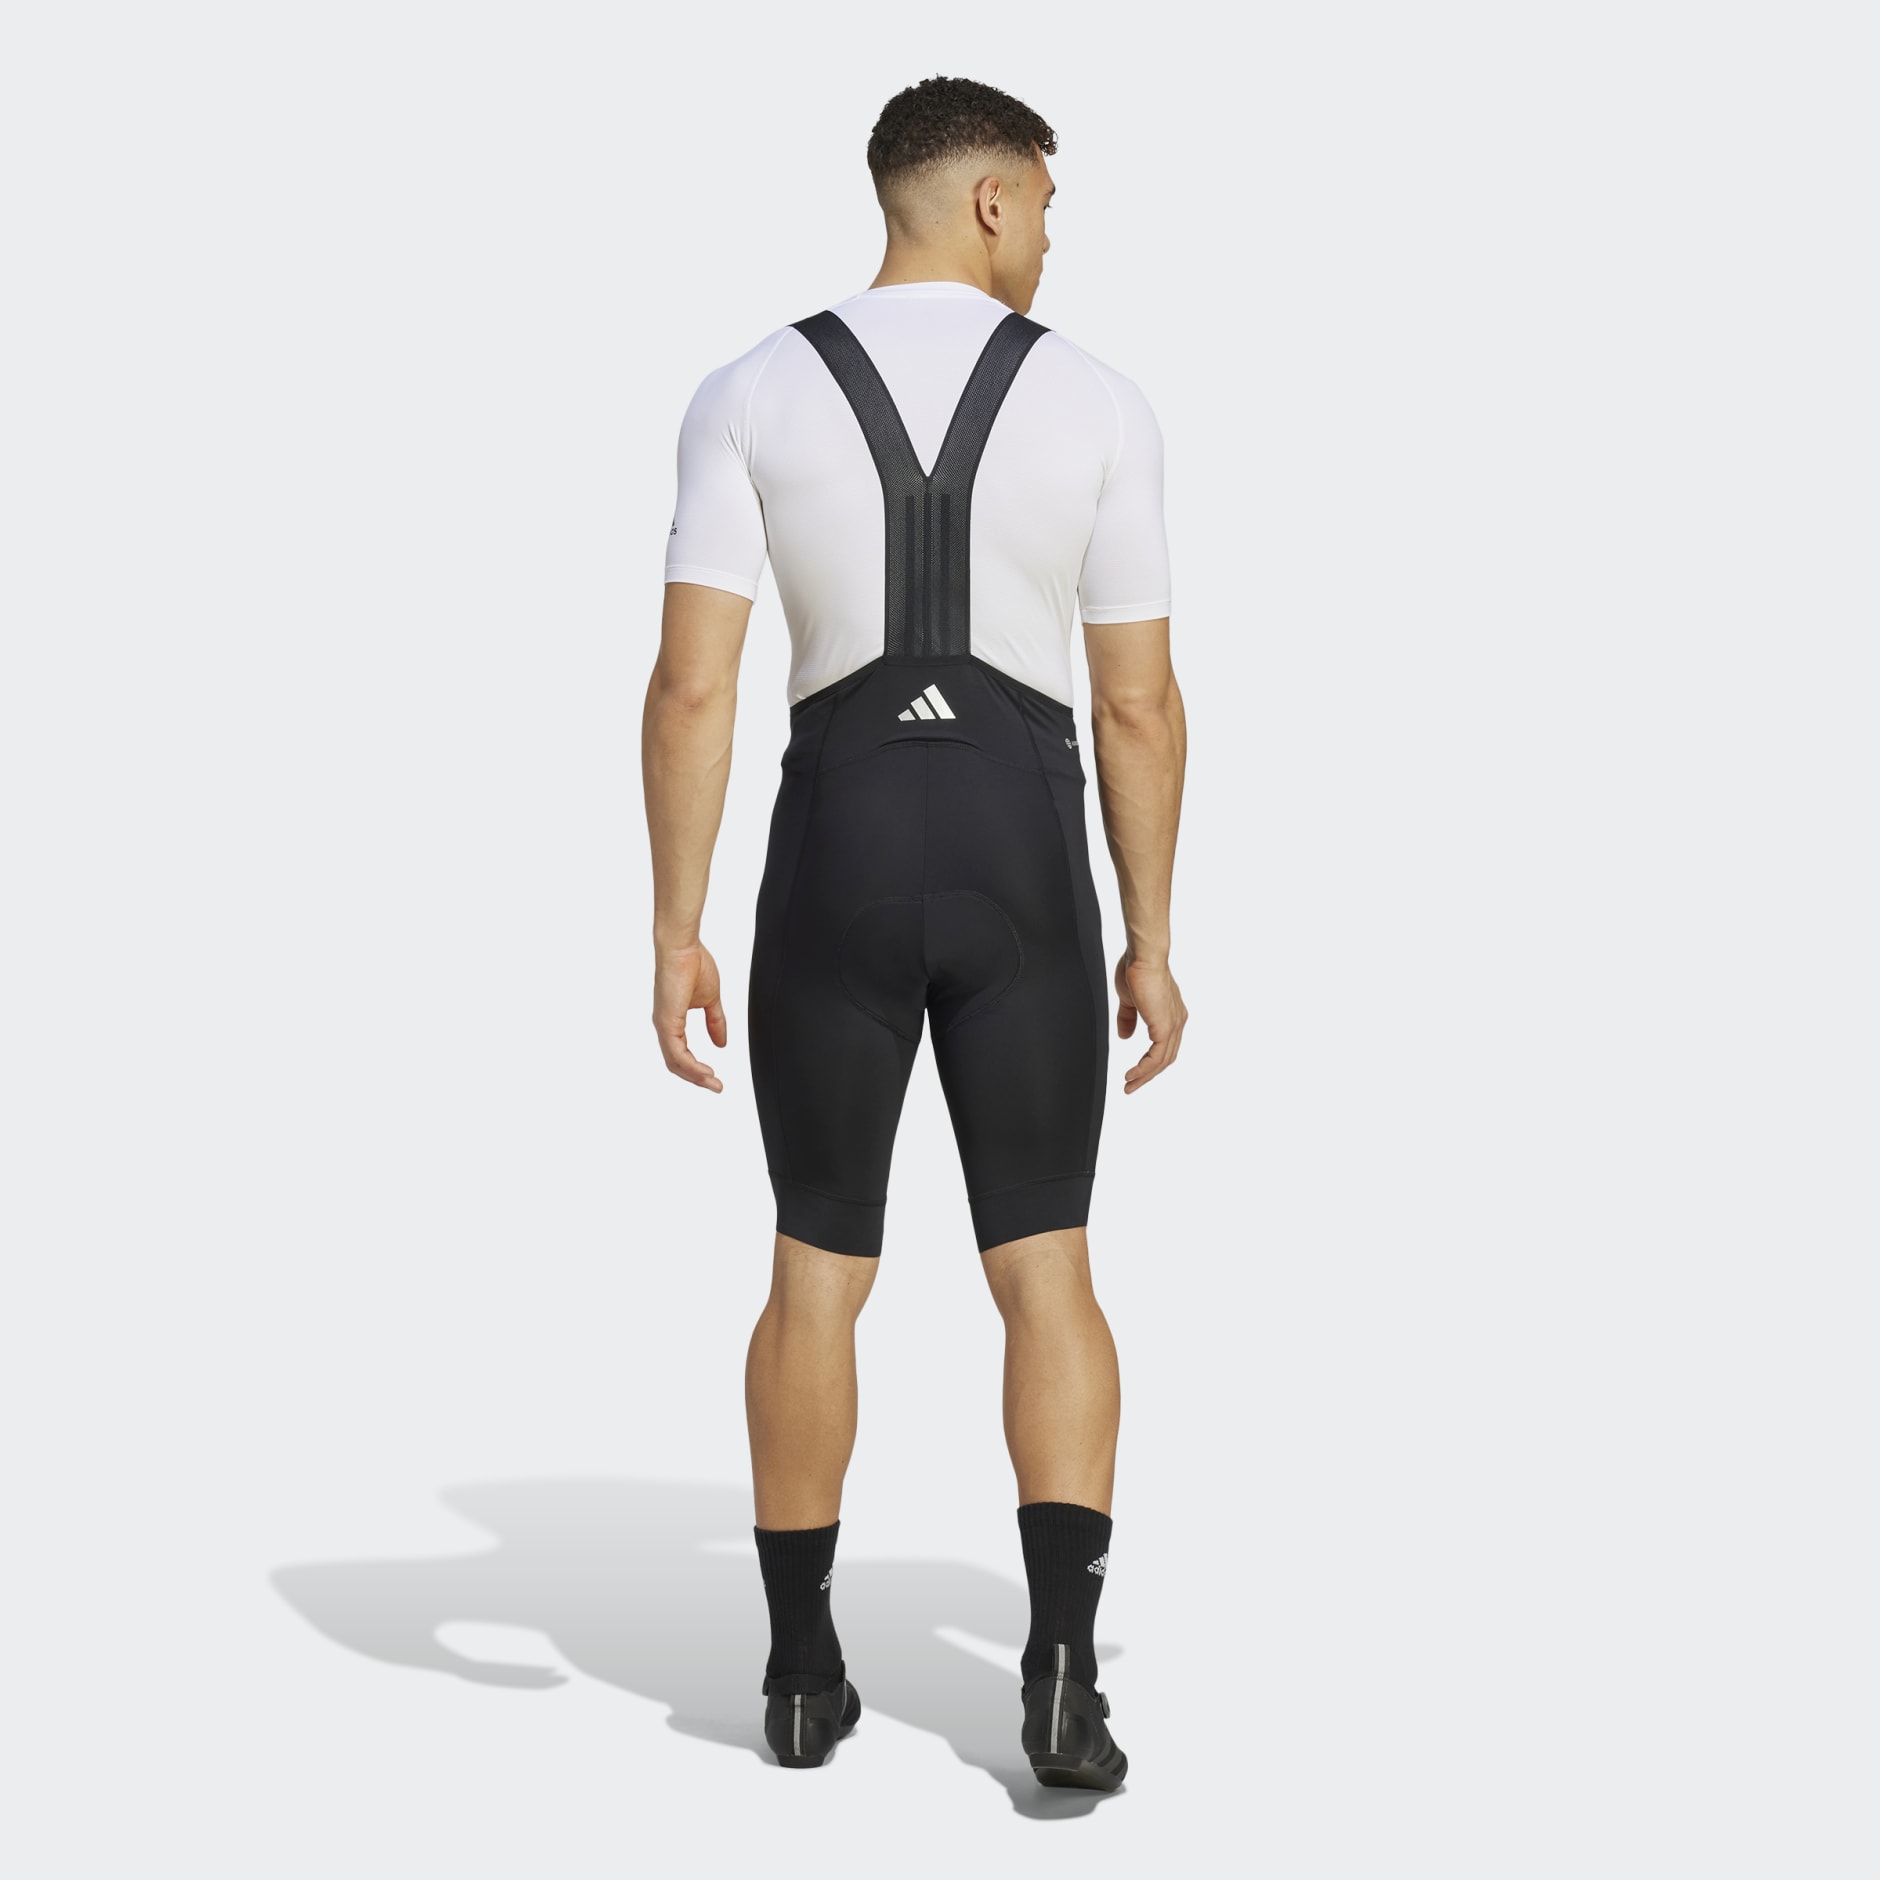 Second Life Marketplace - [IC] Mesh Pants w. Suspenders (Black) Men *PROMO*  New Release!!!